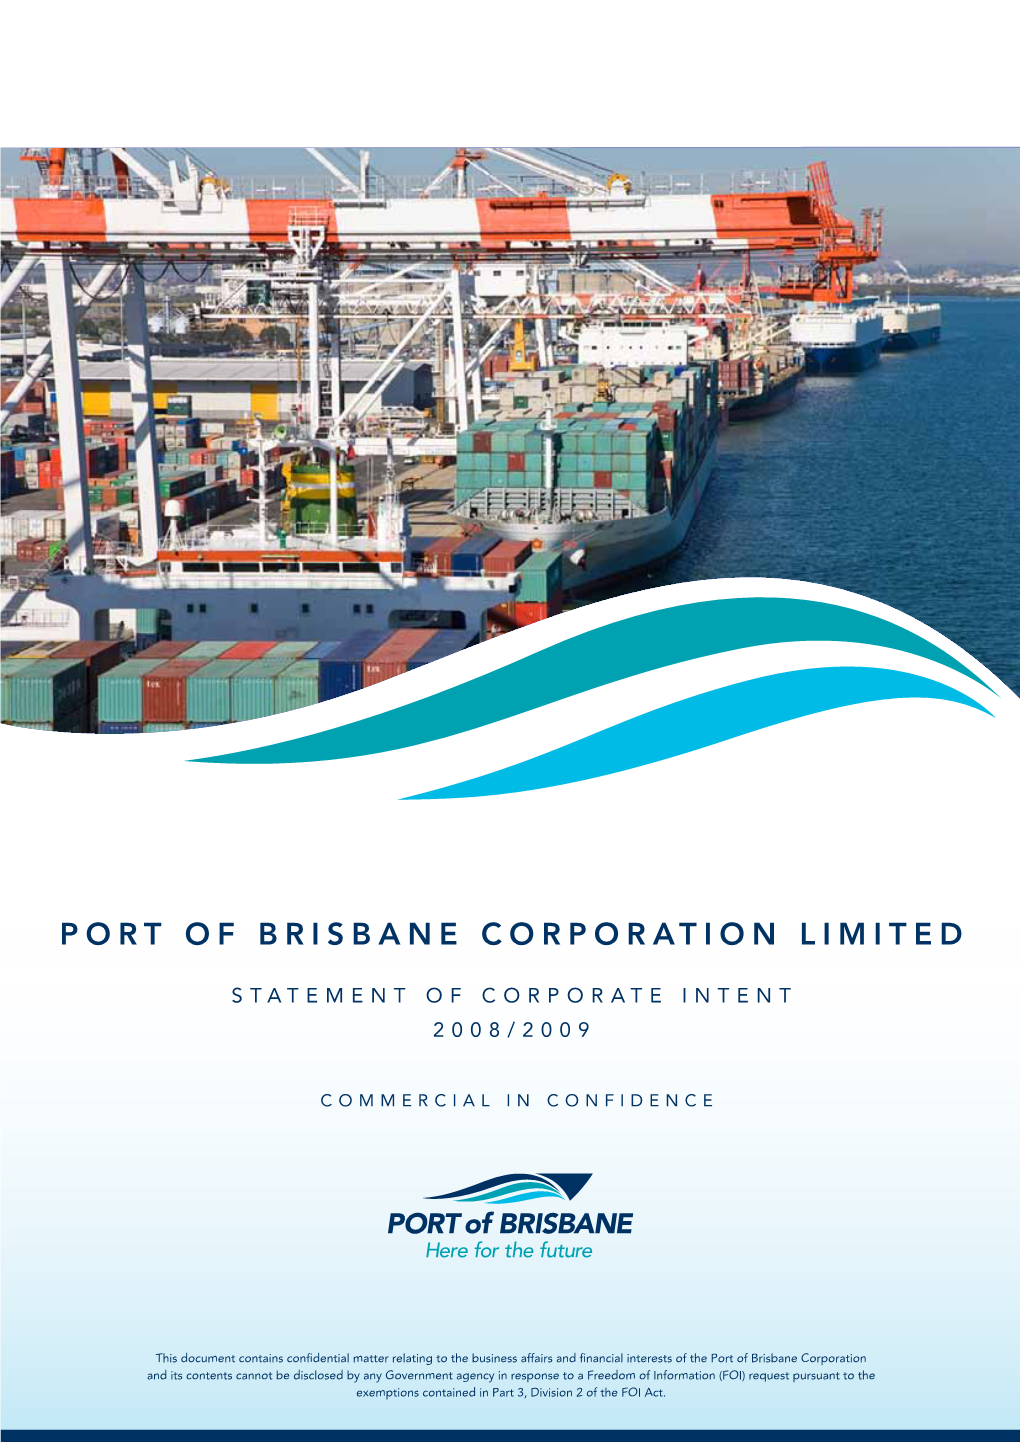 Port of Brisbane Corporation Limited